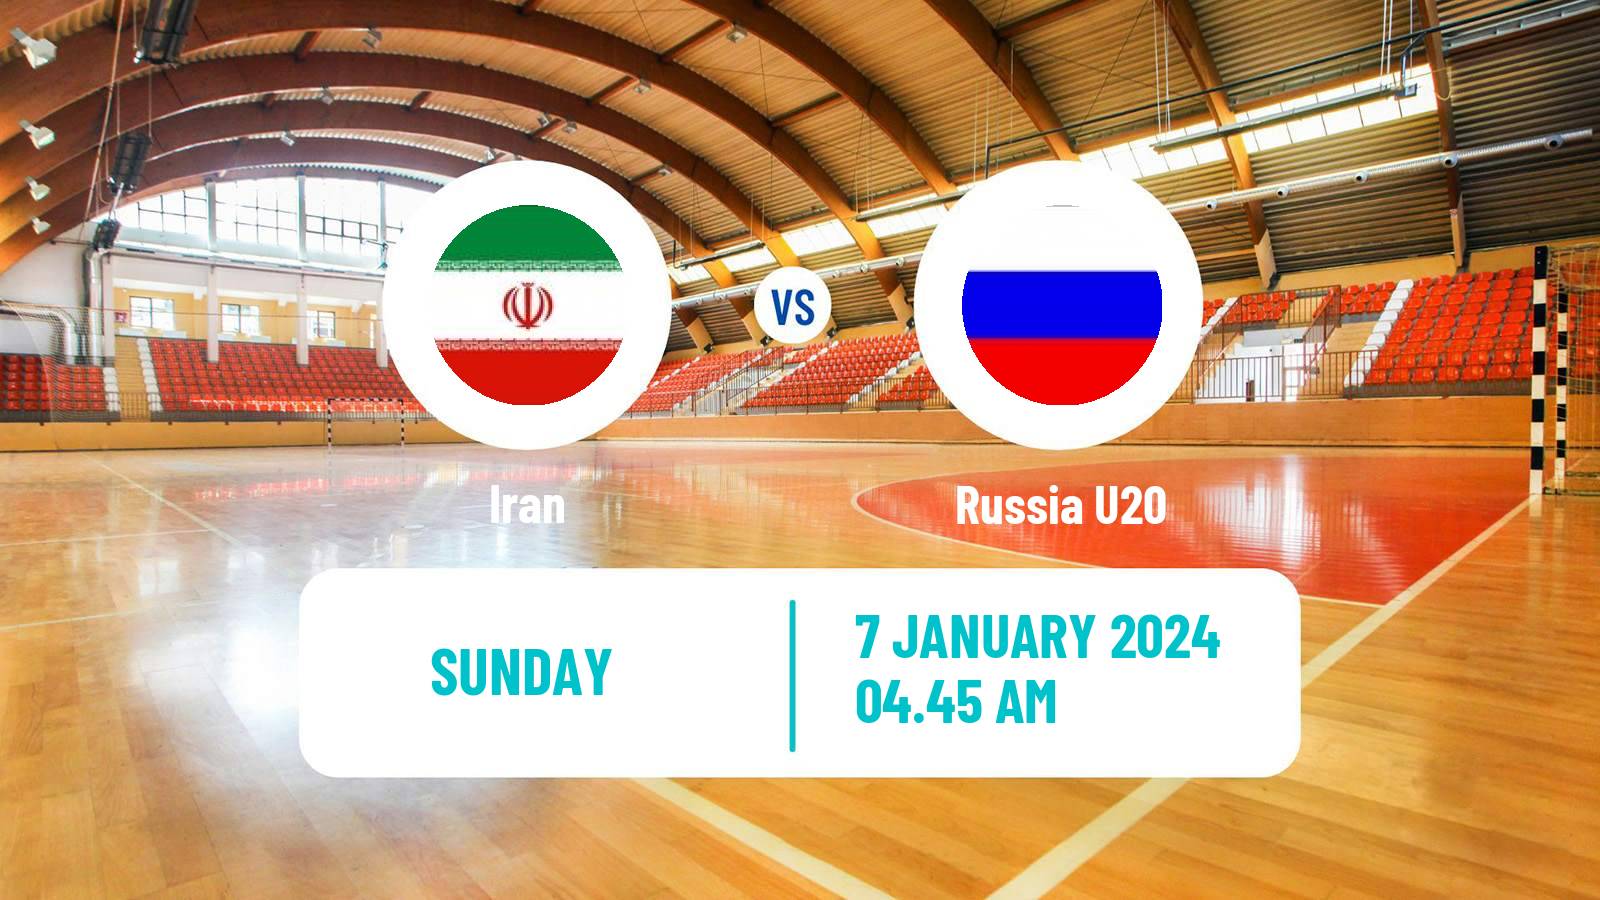 Handball Friendly International Handball Iran - Russia U20